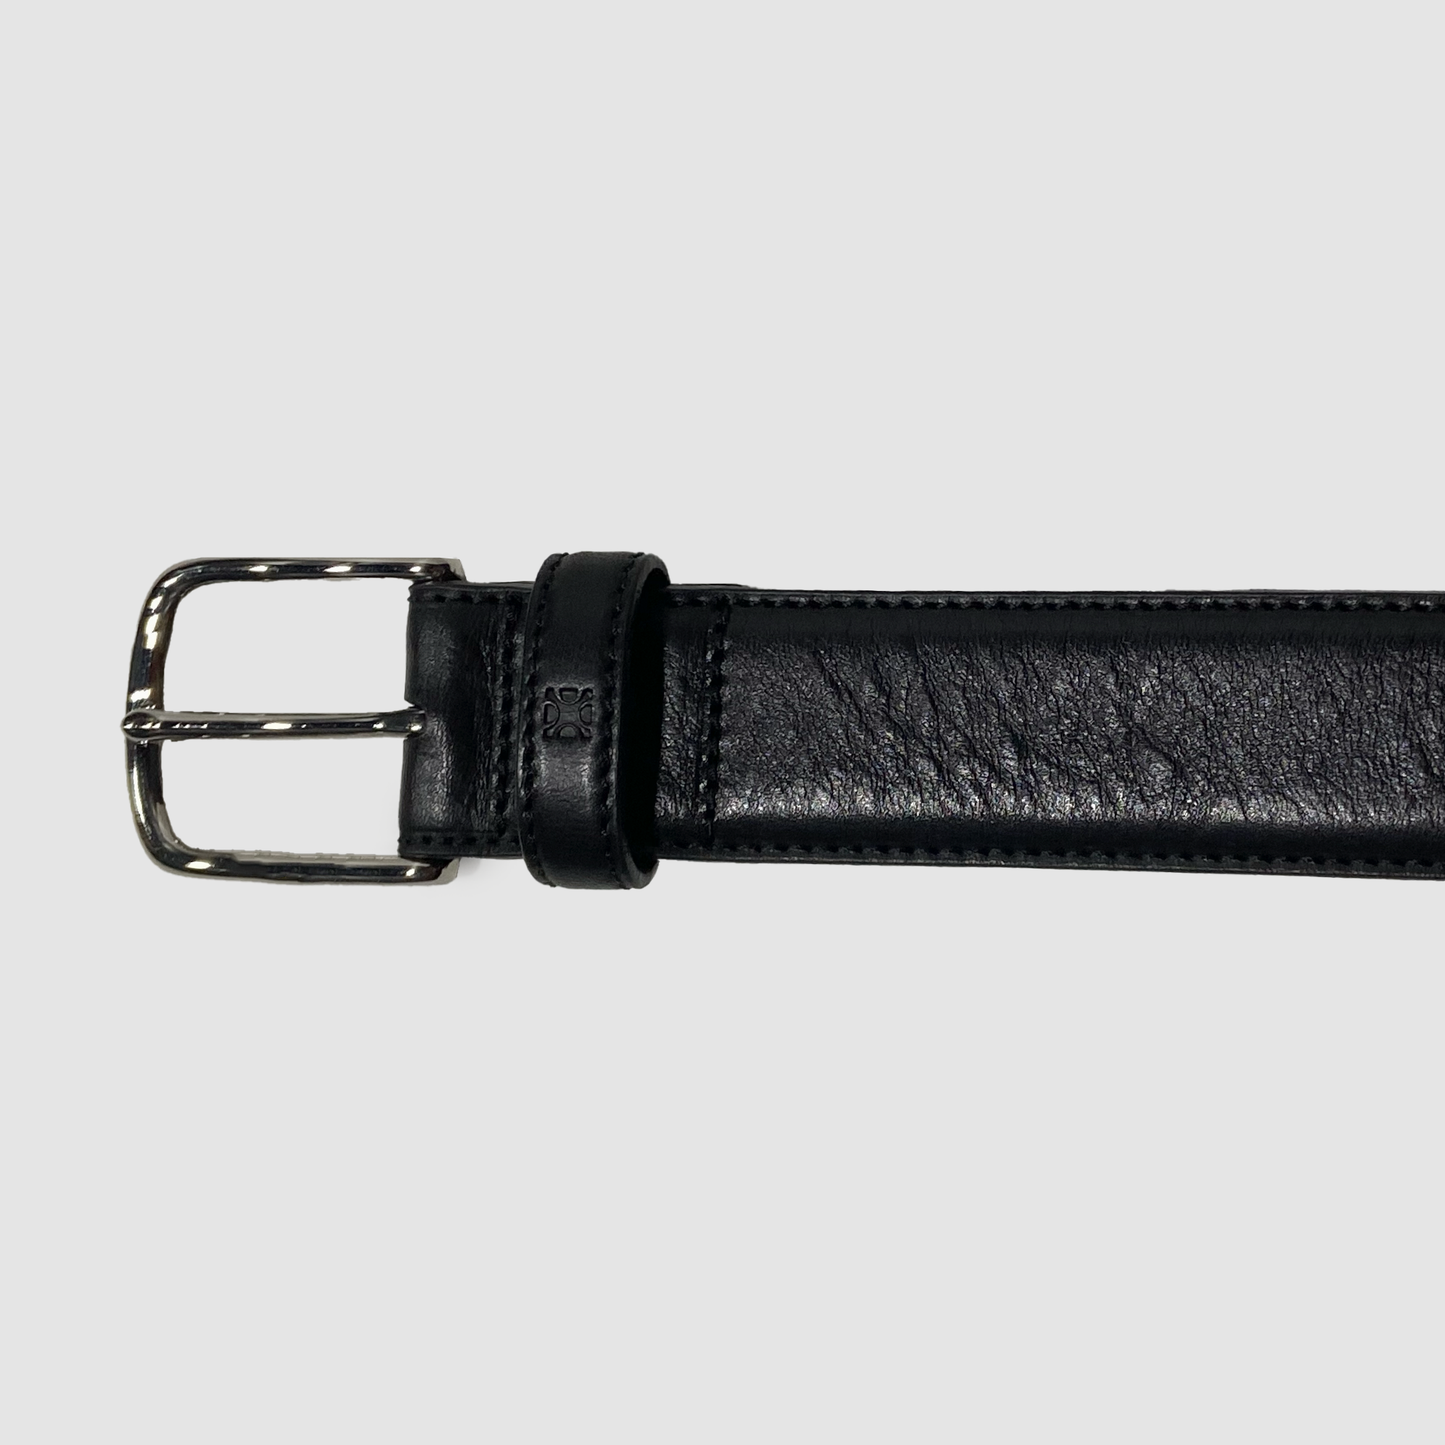 Classic Stitched Leather Belt Black